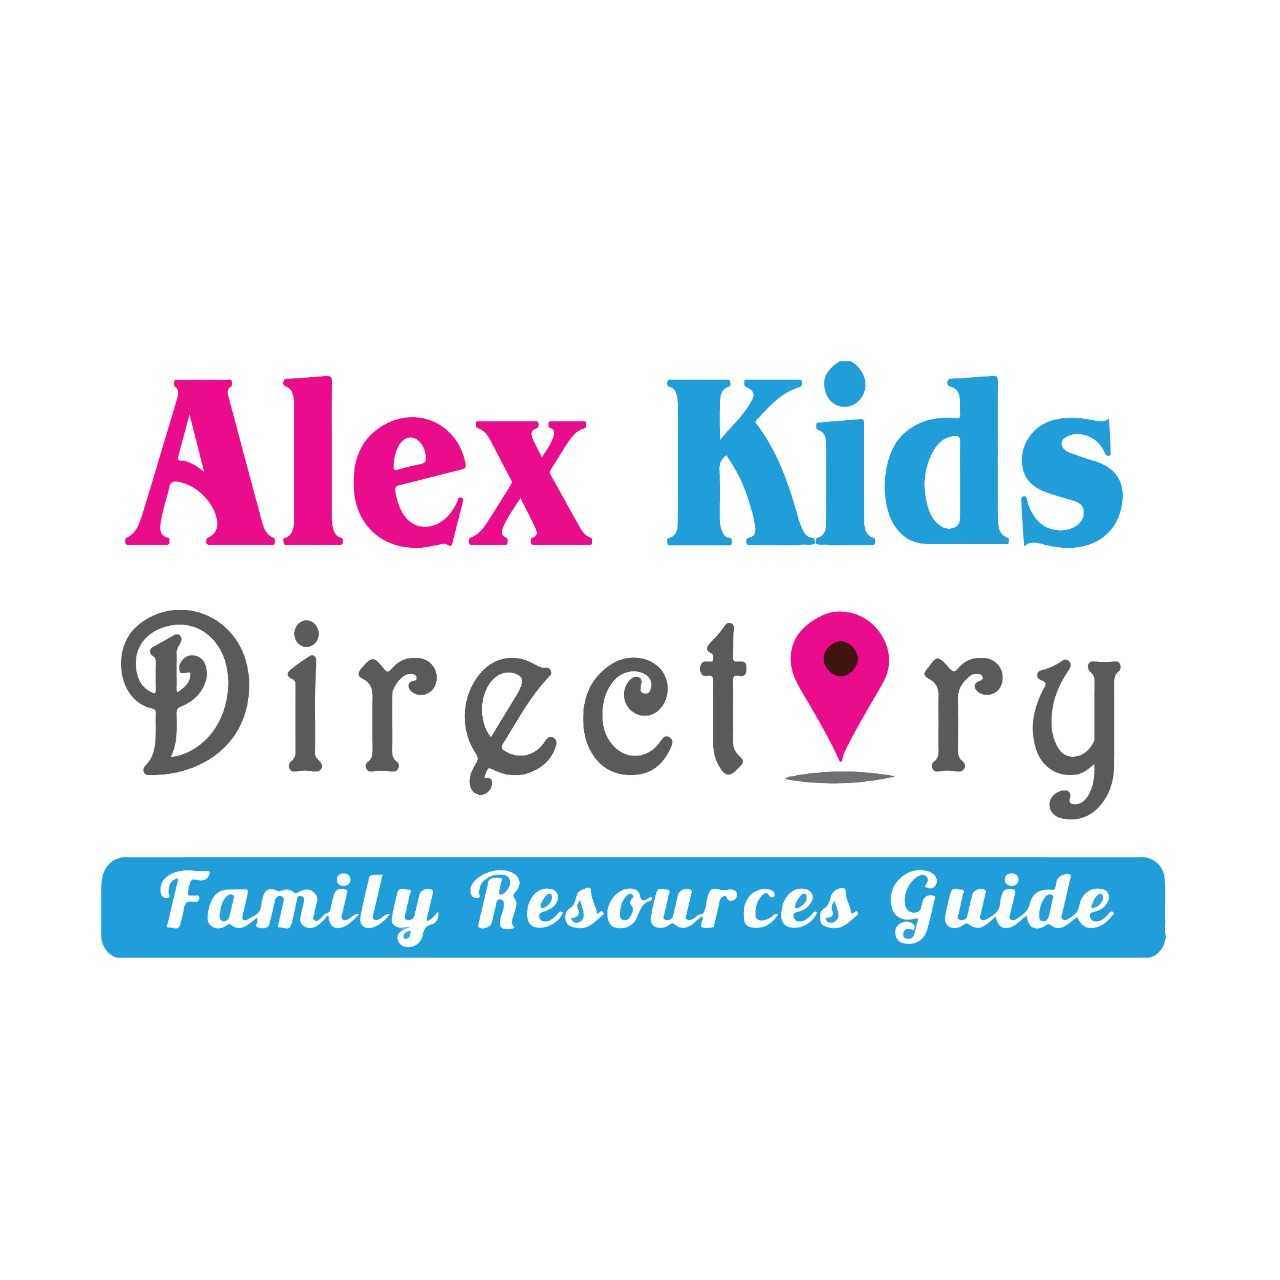 Alex kids Directory